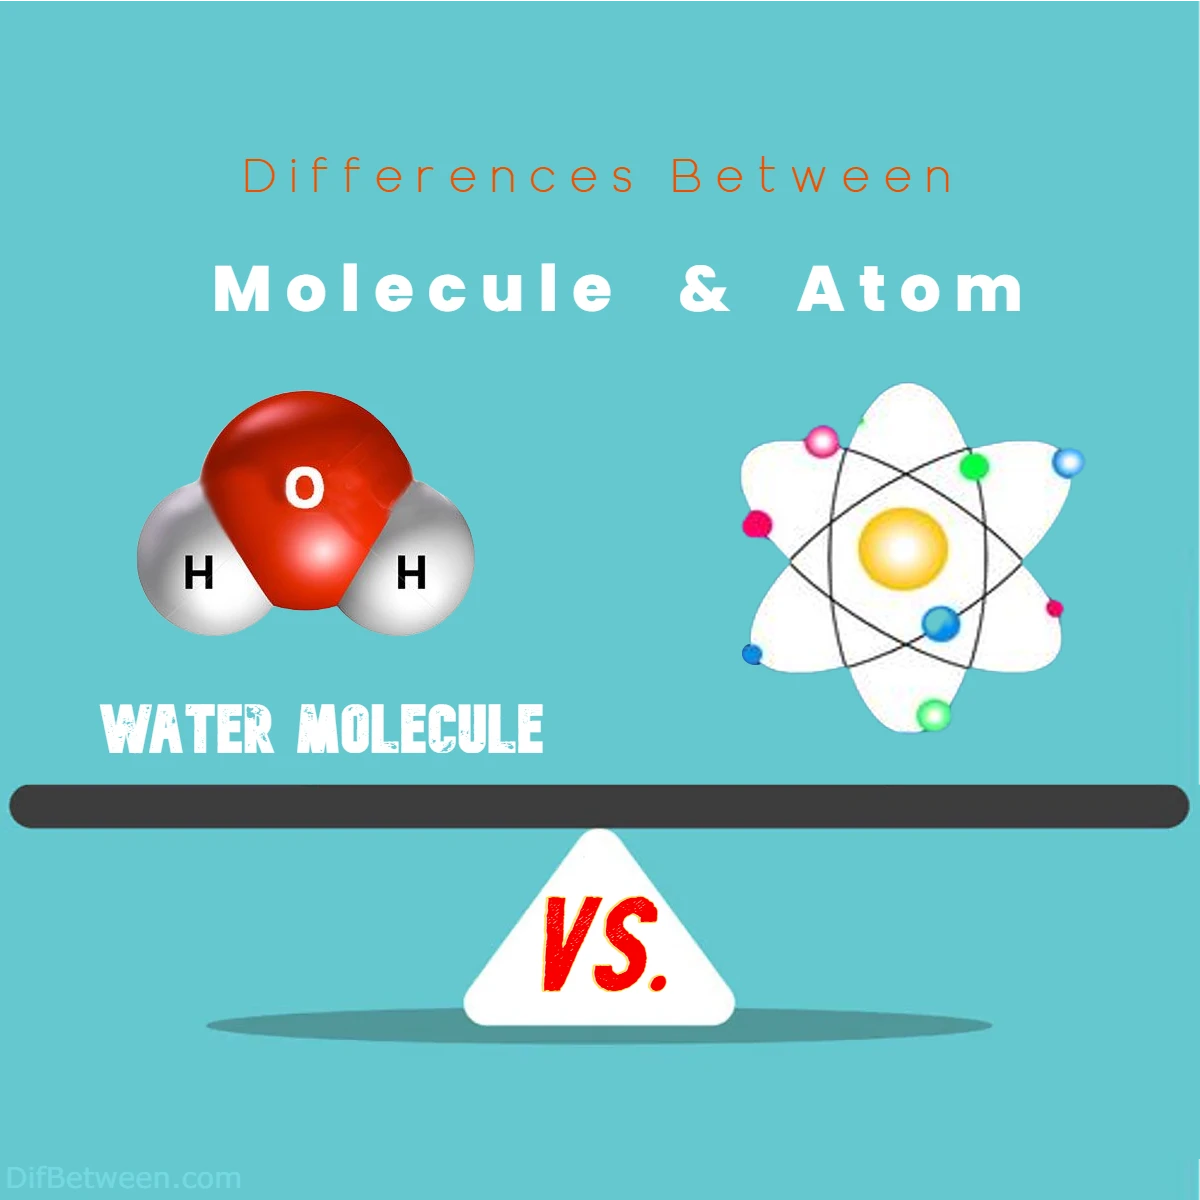 Differences Between Molecule vs Atom